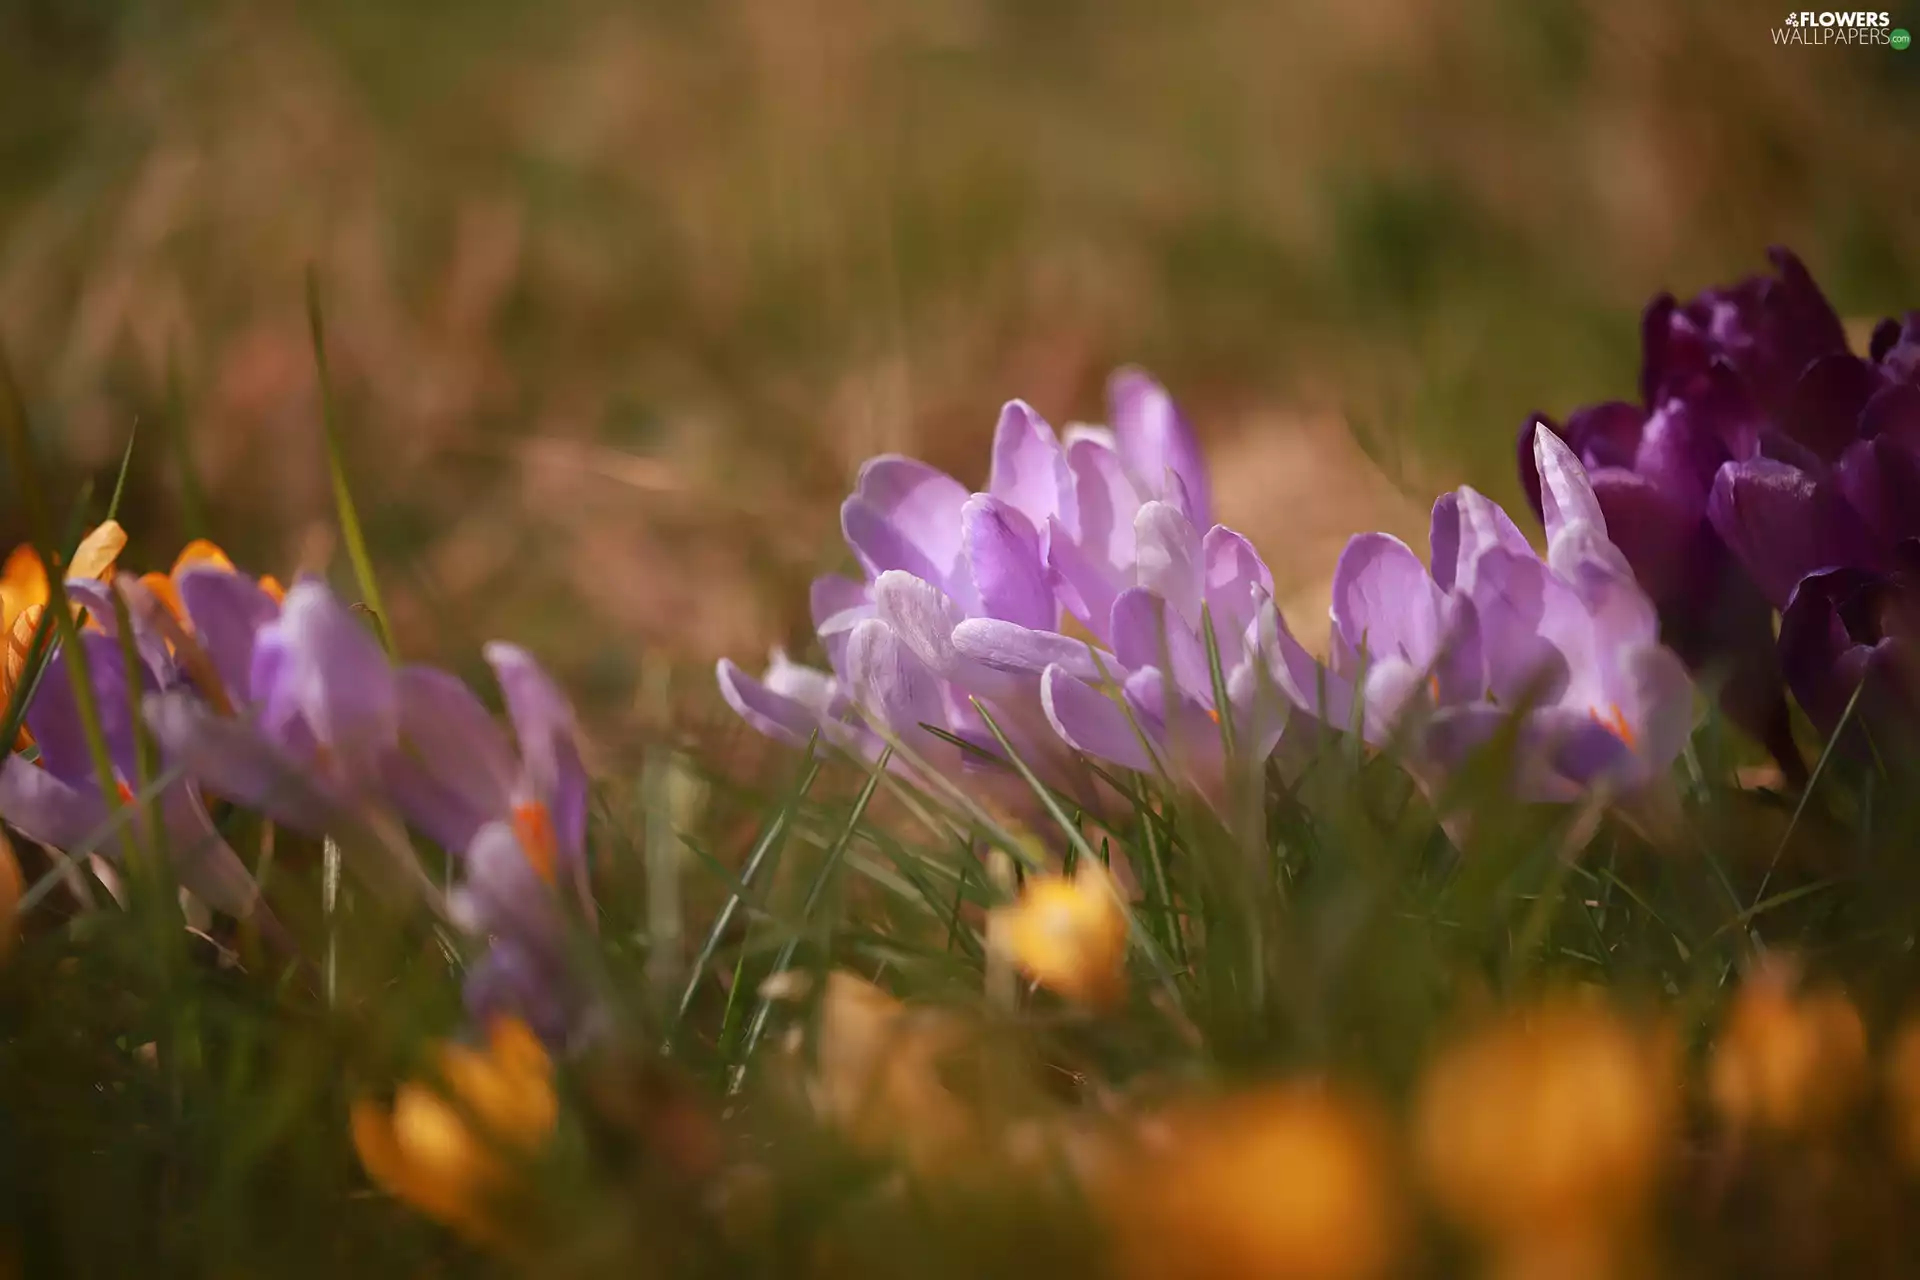 Tufts, grass, crocuses, Flowers, purple